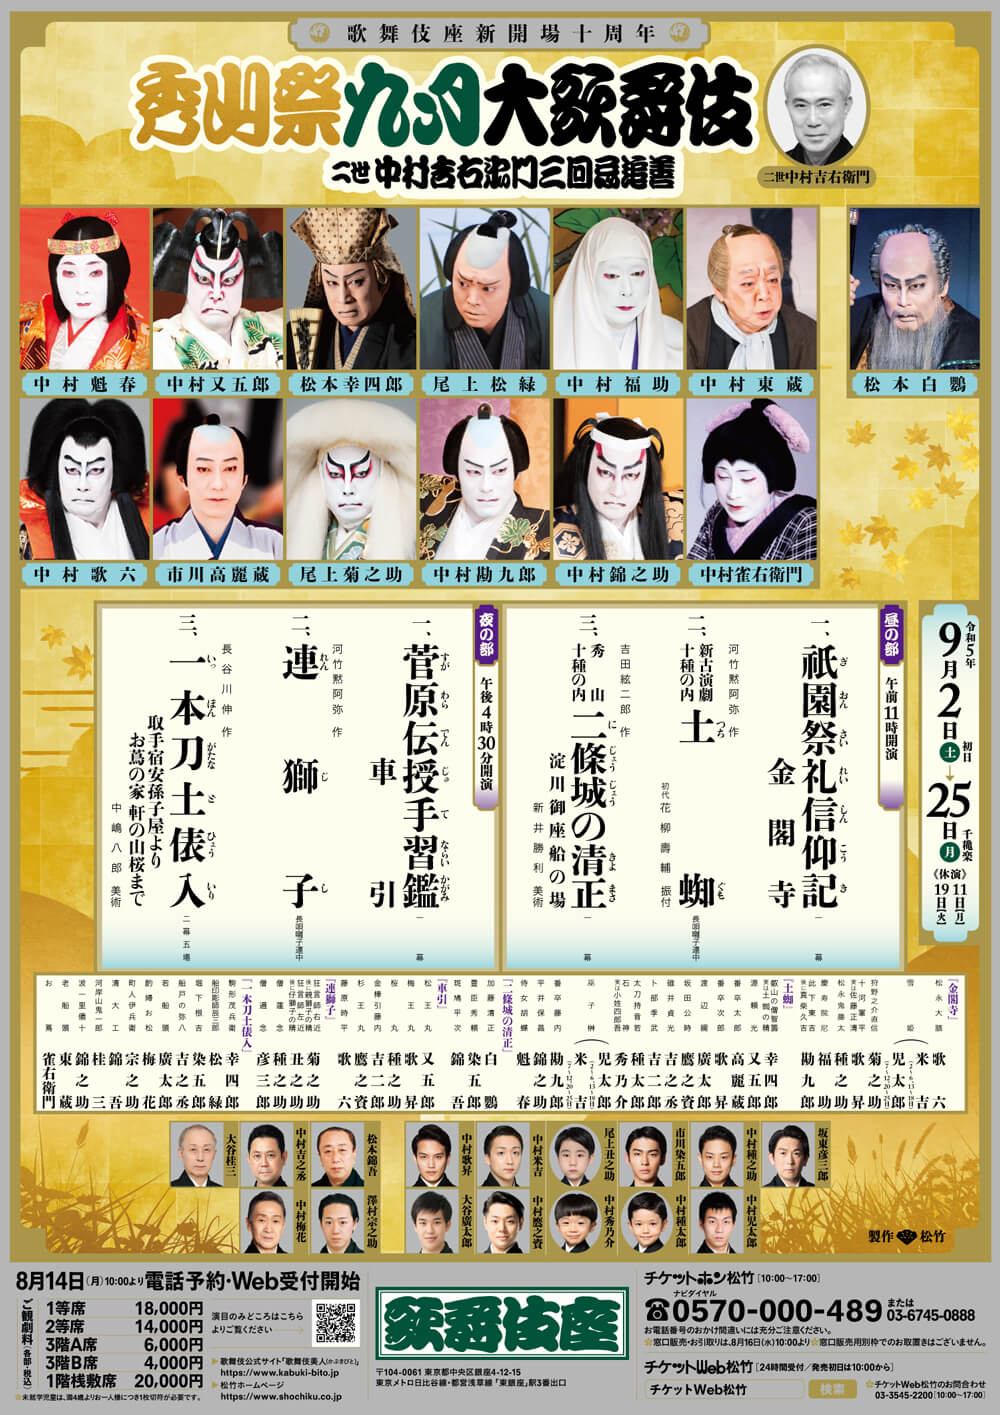 September Program at the kabukiza